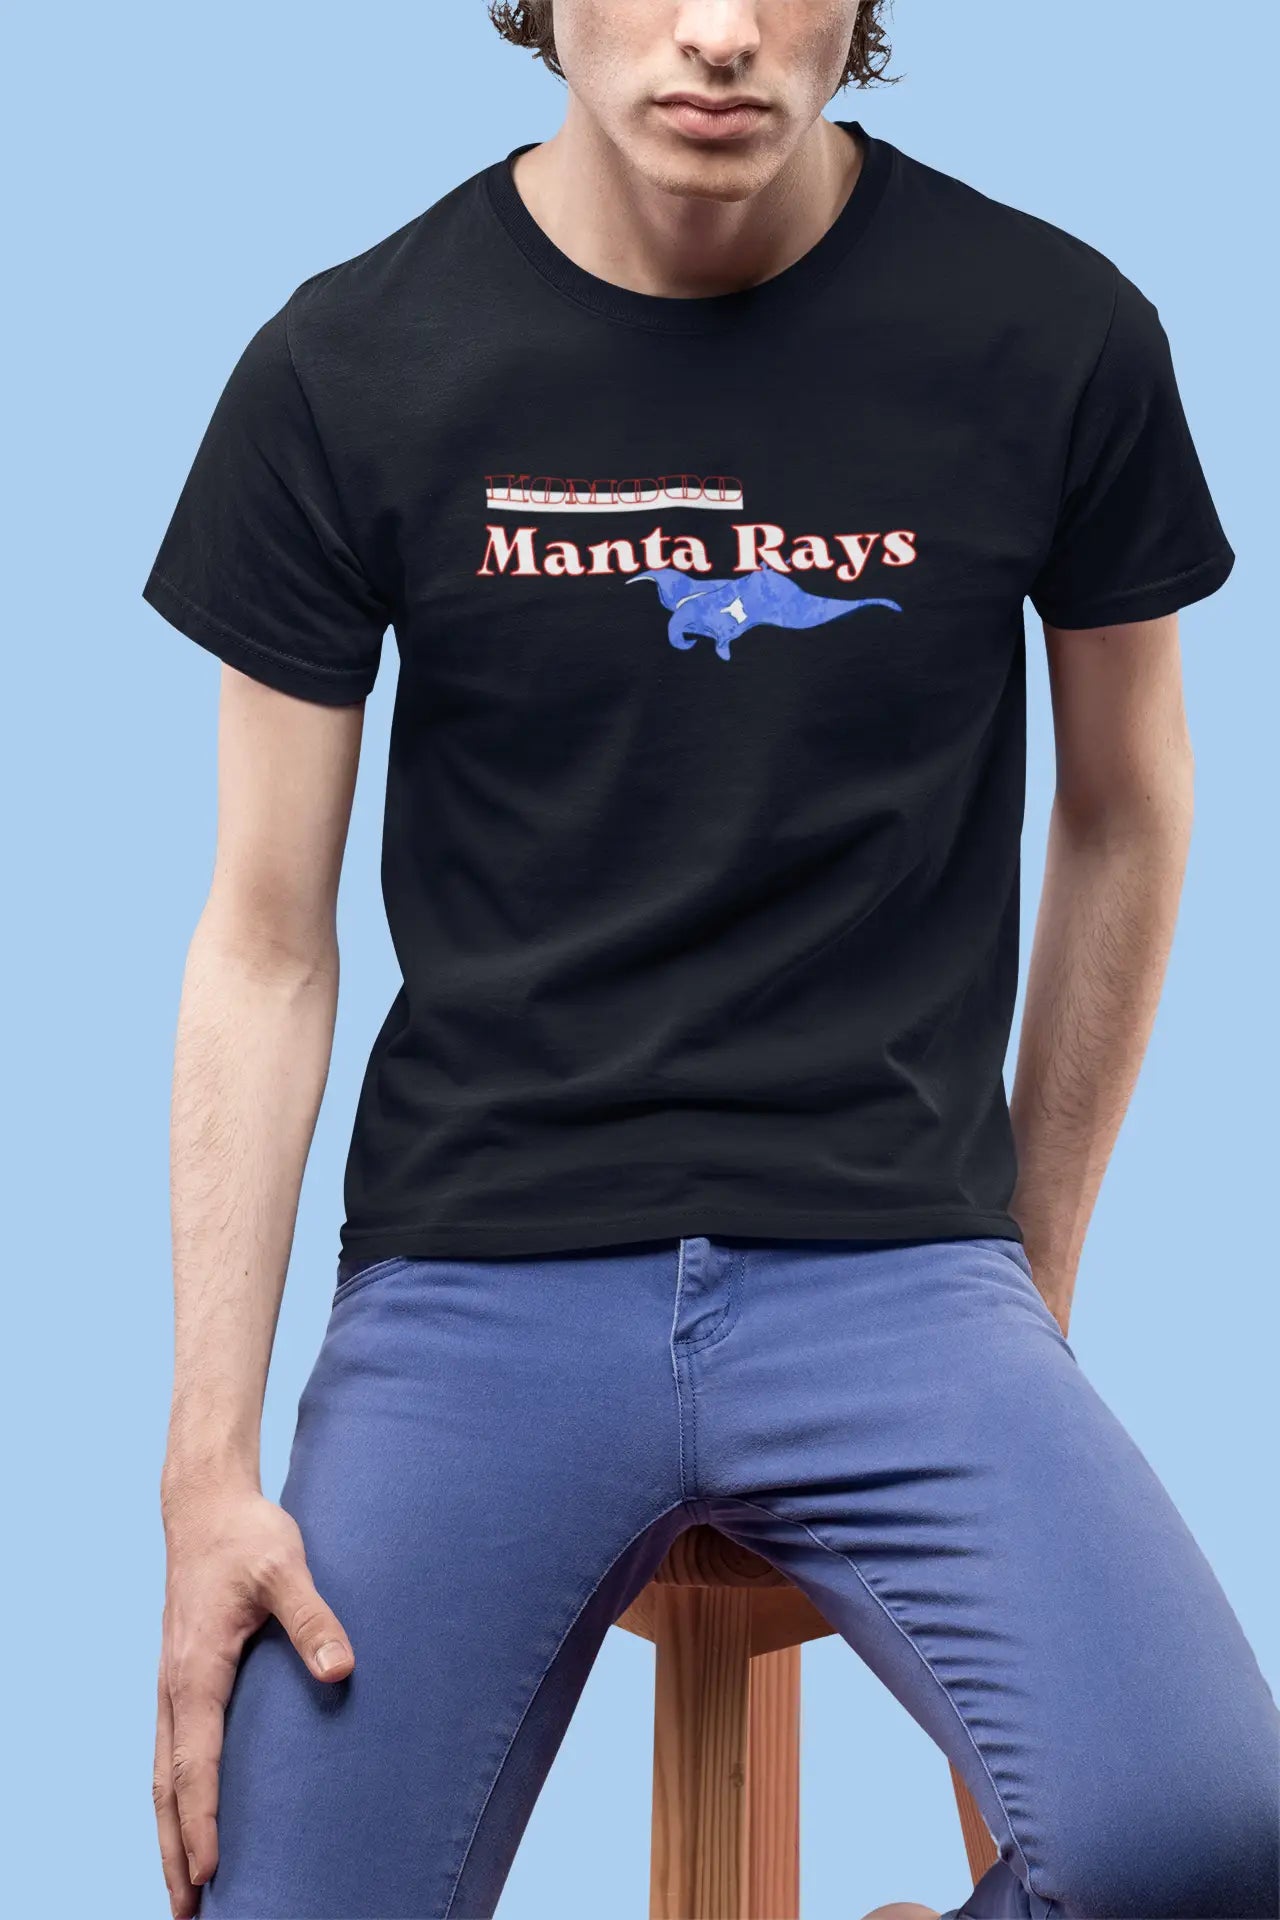 manta rays t-shirt komodo